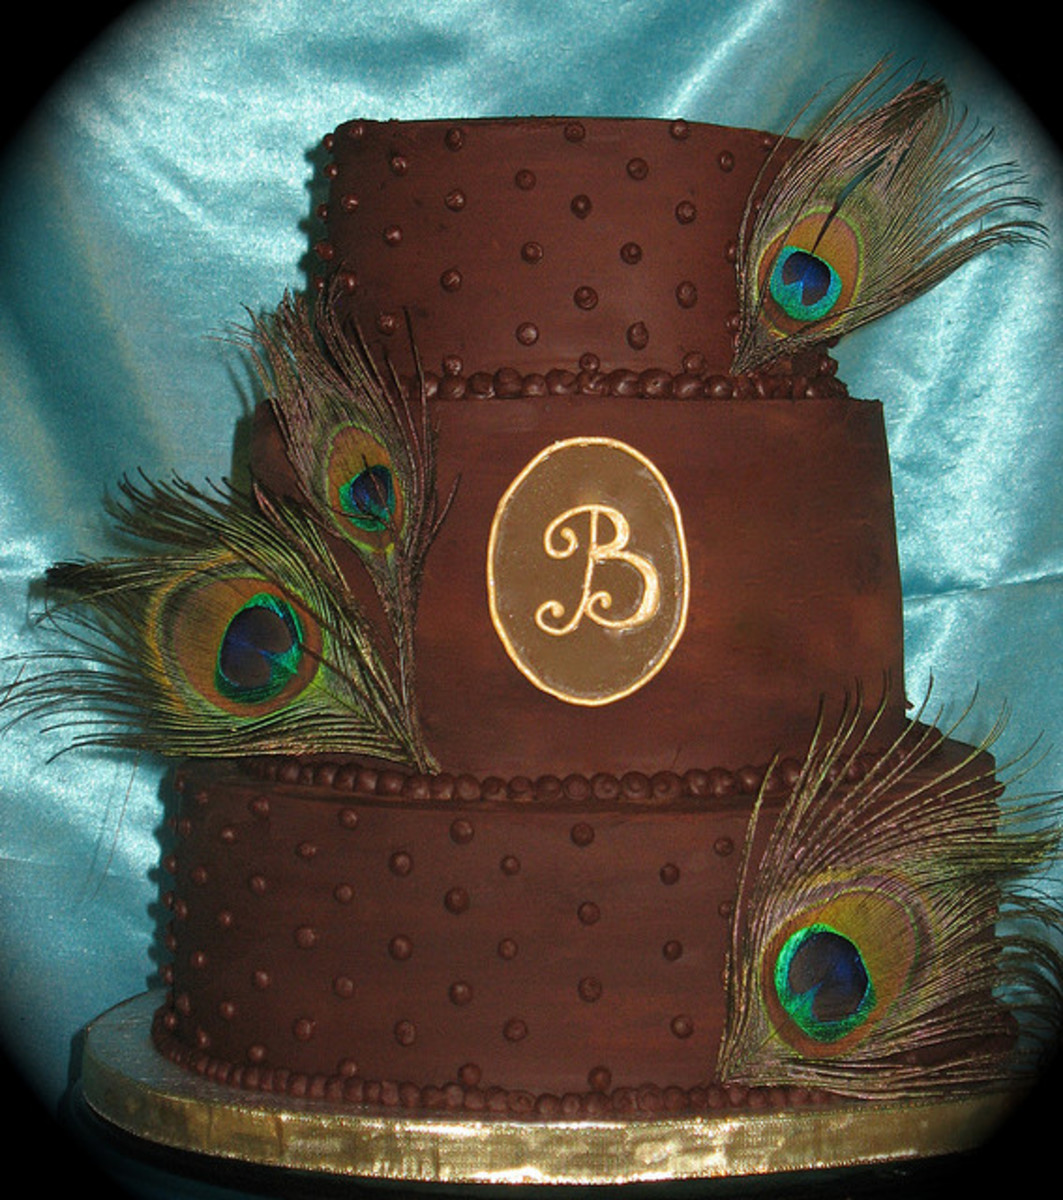 peacock-wedding-cakes